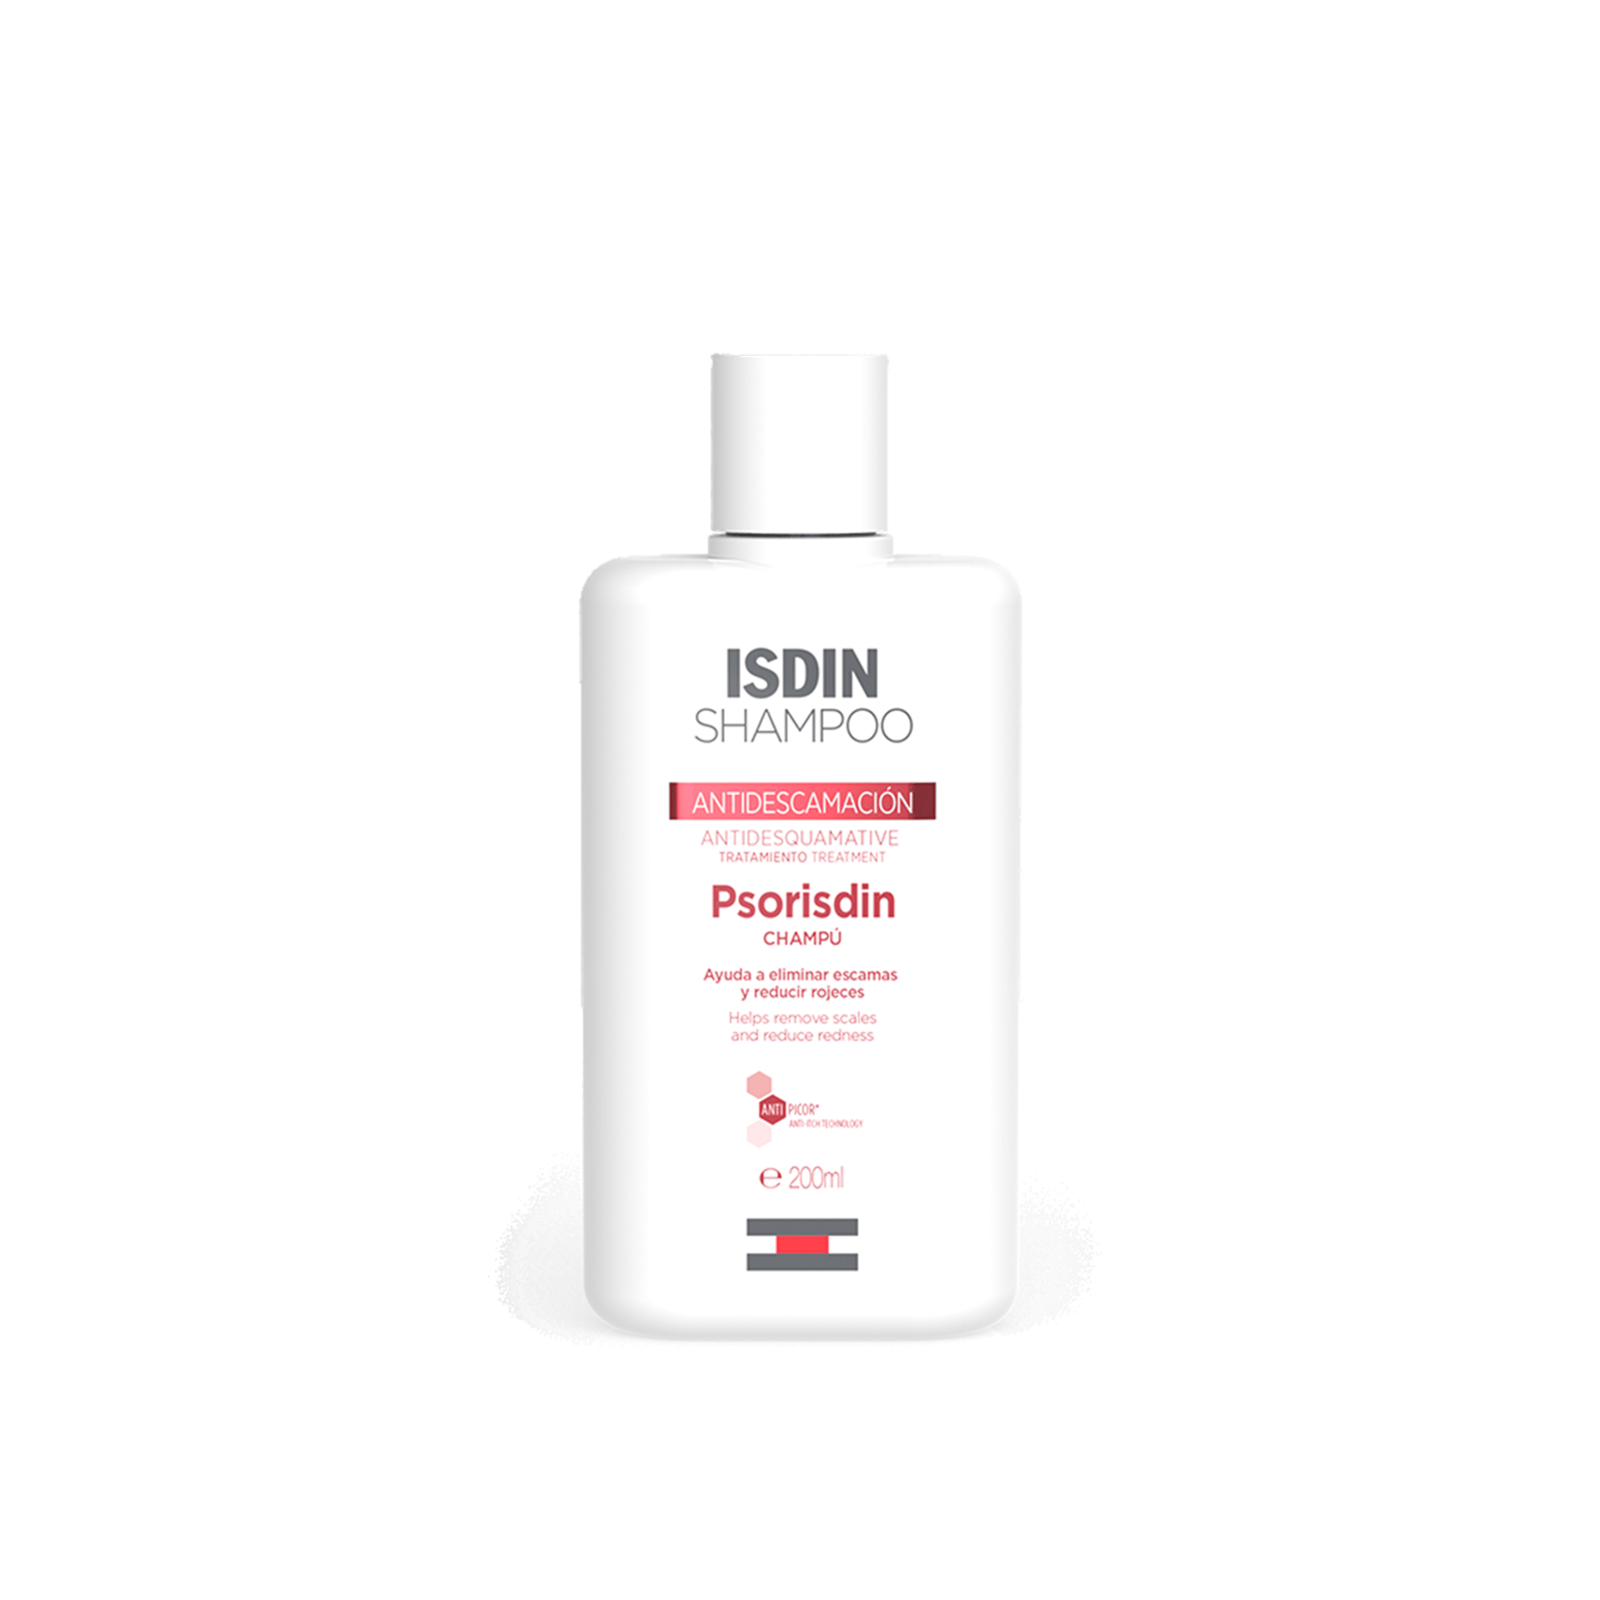 ISDIN Psorisdin Psoriatic Skin Control Shampoo 200ml (6.76fl oz)